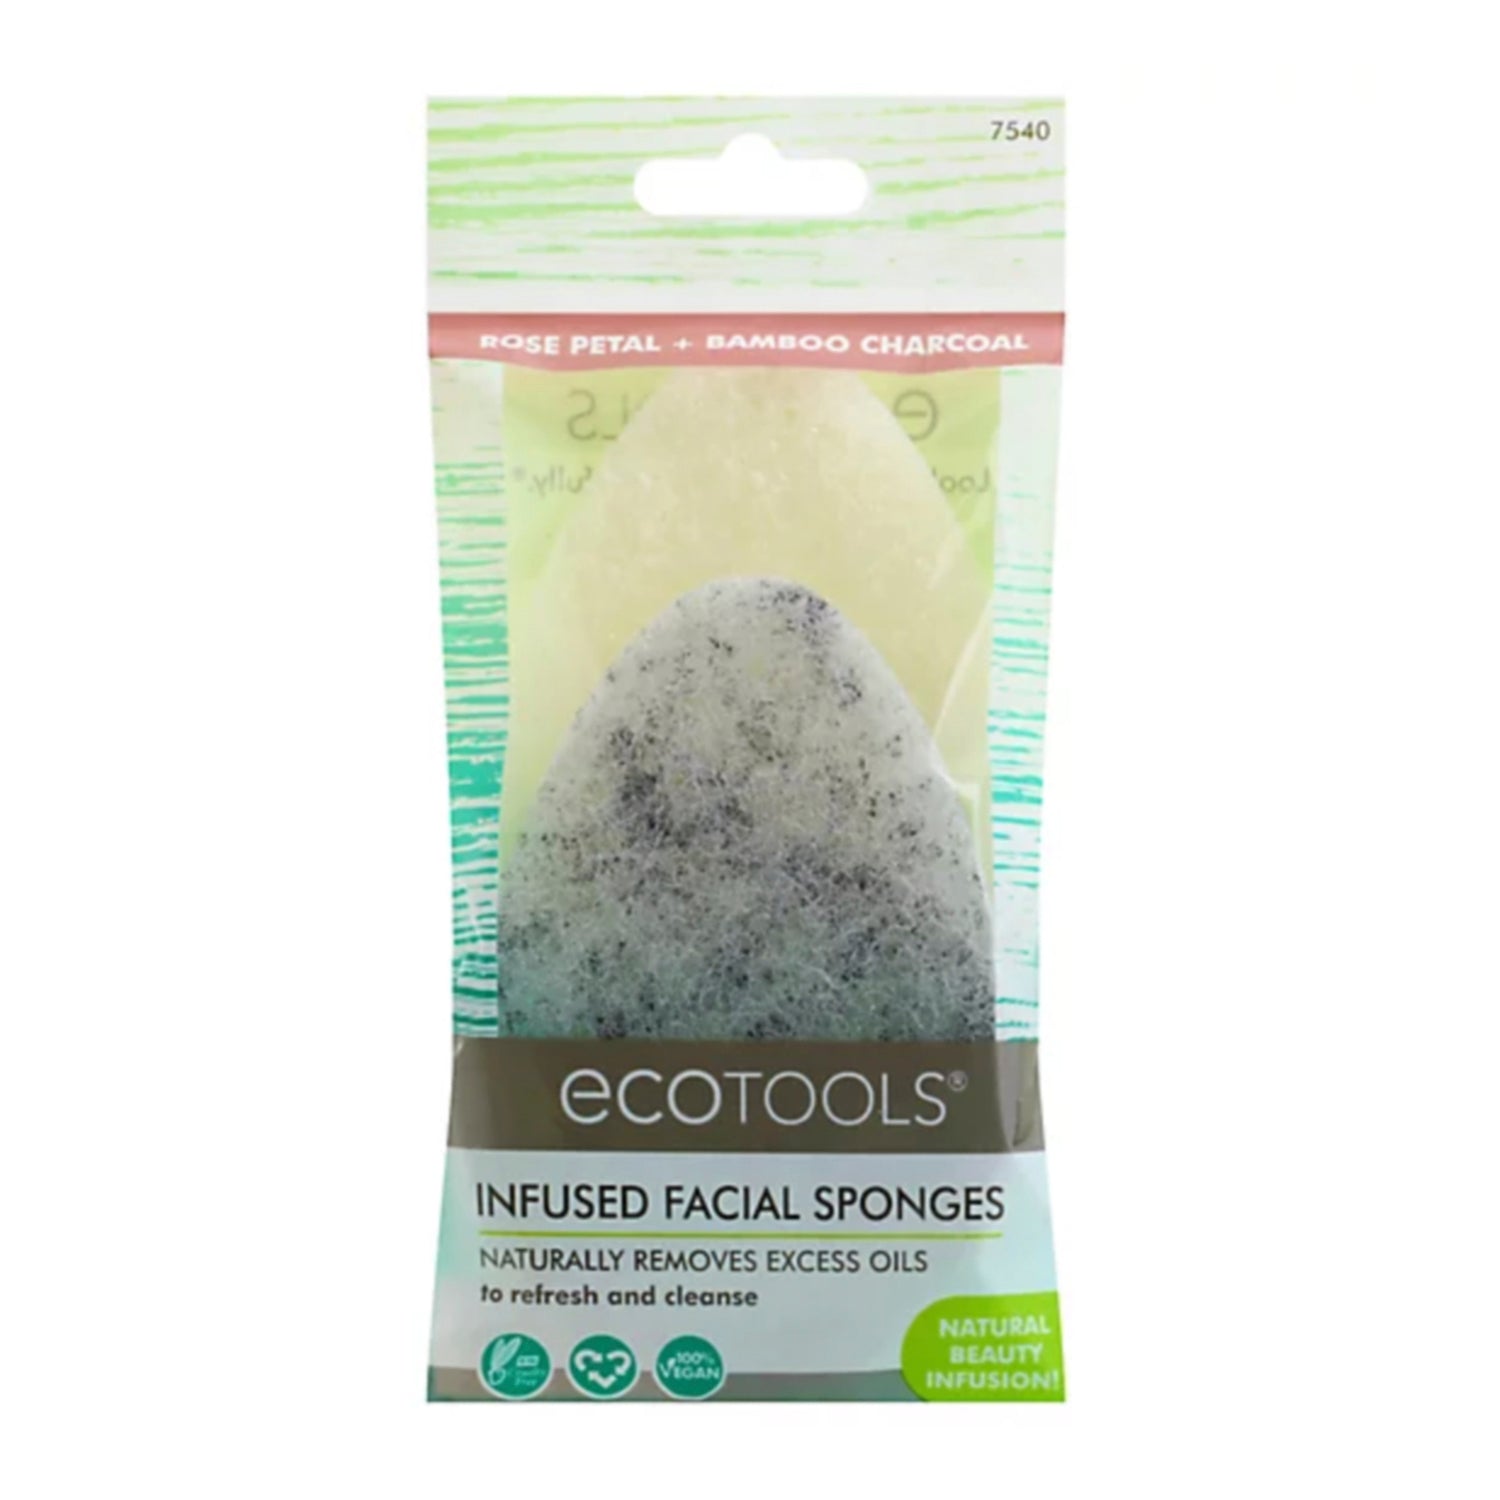 Ecotools Infused Rose & Bamboo Charcoal Facial Sponge 2pcs